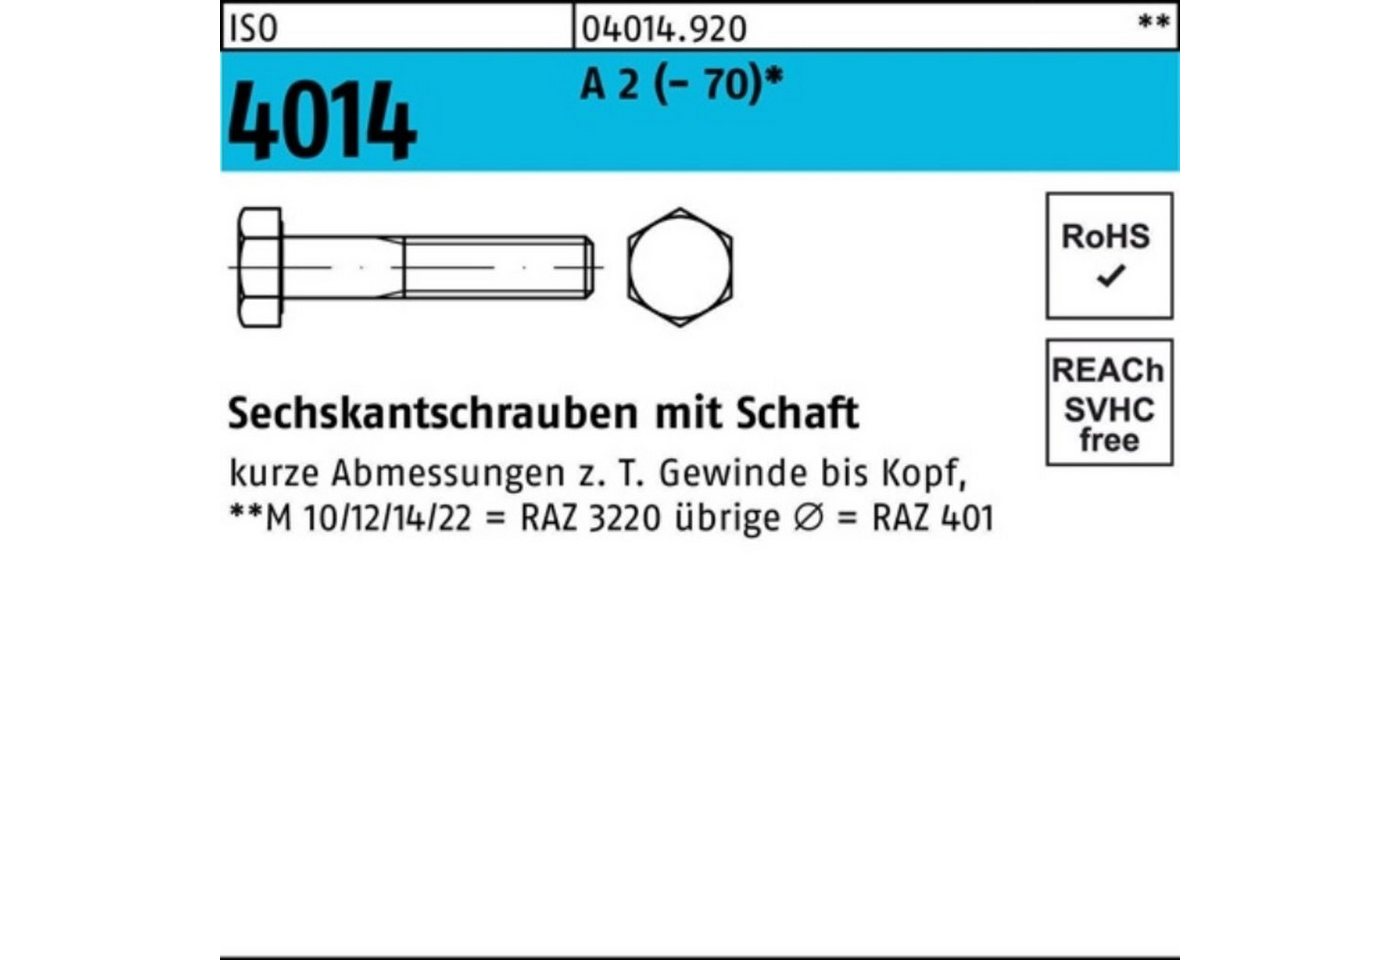 Bufab Sechskantschraube 100er Pack Sechskantschraube ISO 4014 Schaft M18x 130 A 2 (70) 25 St von Bufab